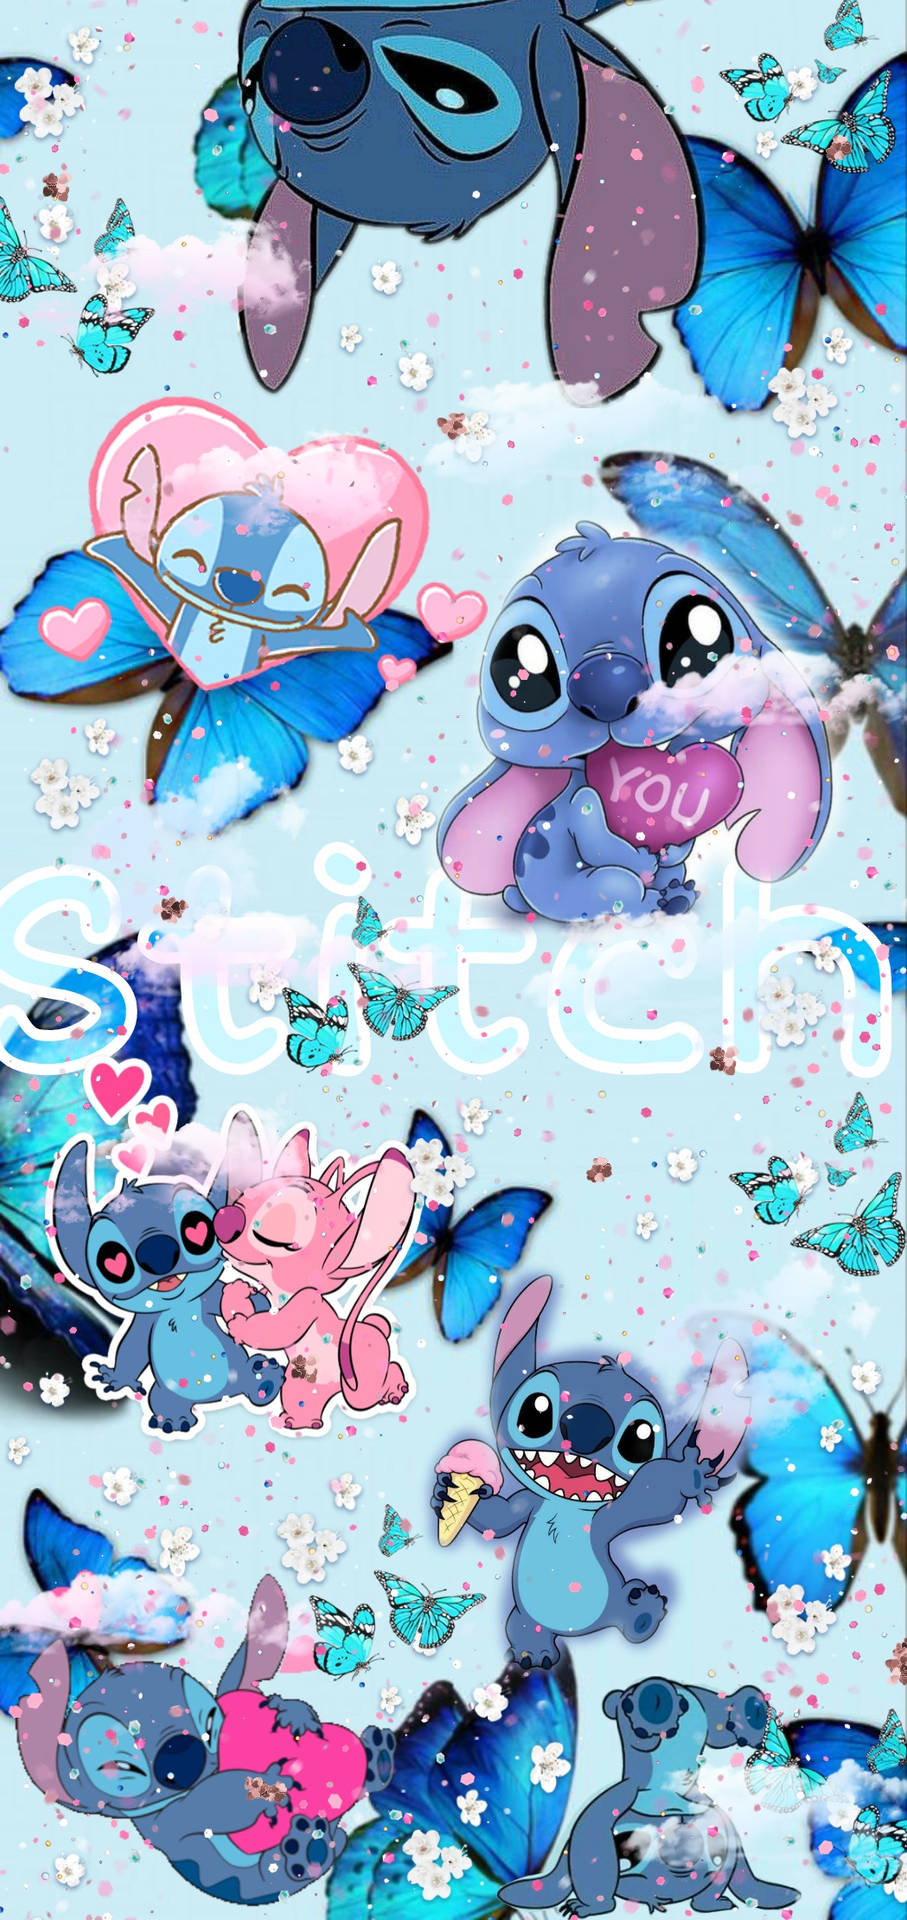 Adorable Stitch Collage